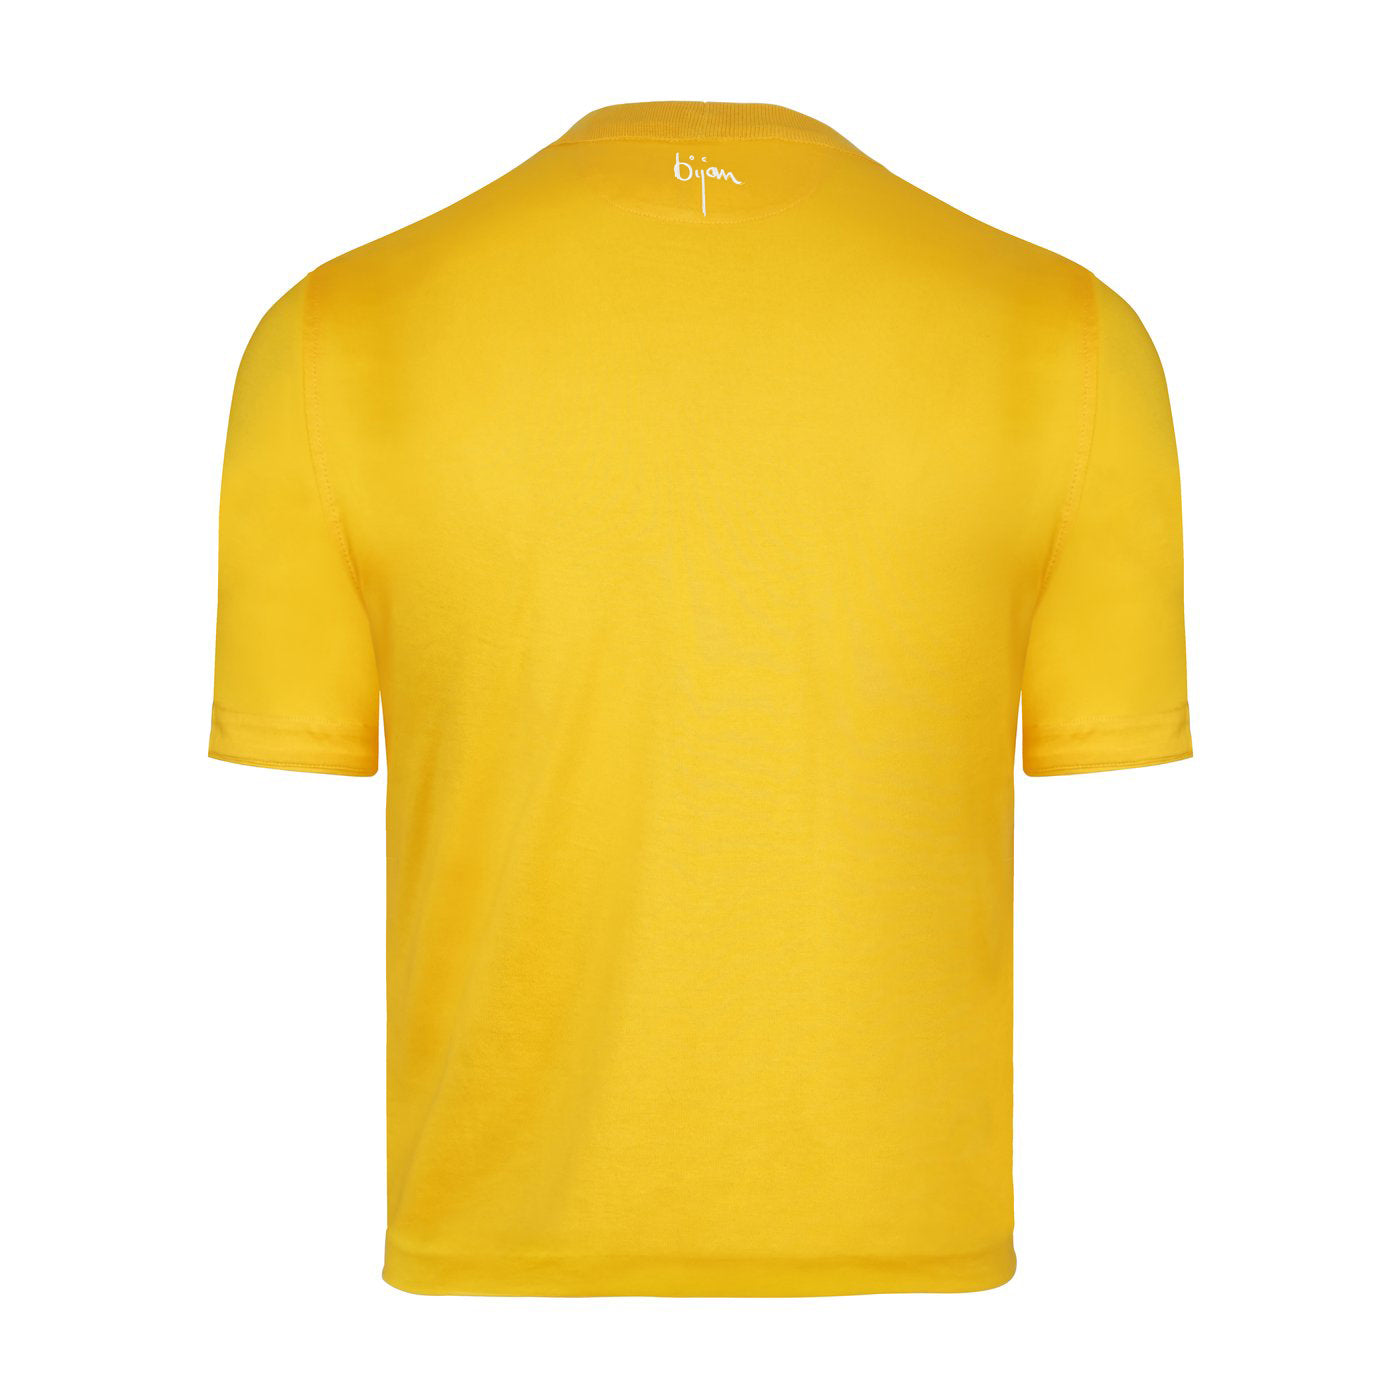 Bijan Yellow with White Crest Short Sleeve T-Shirt – House of Bijan